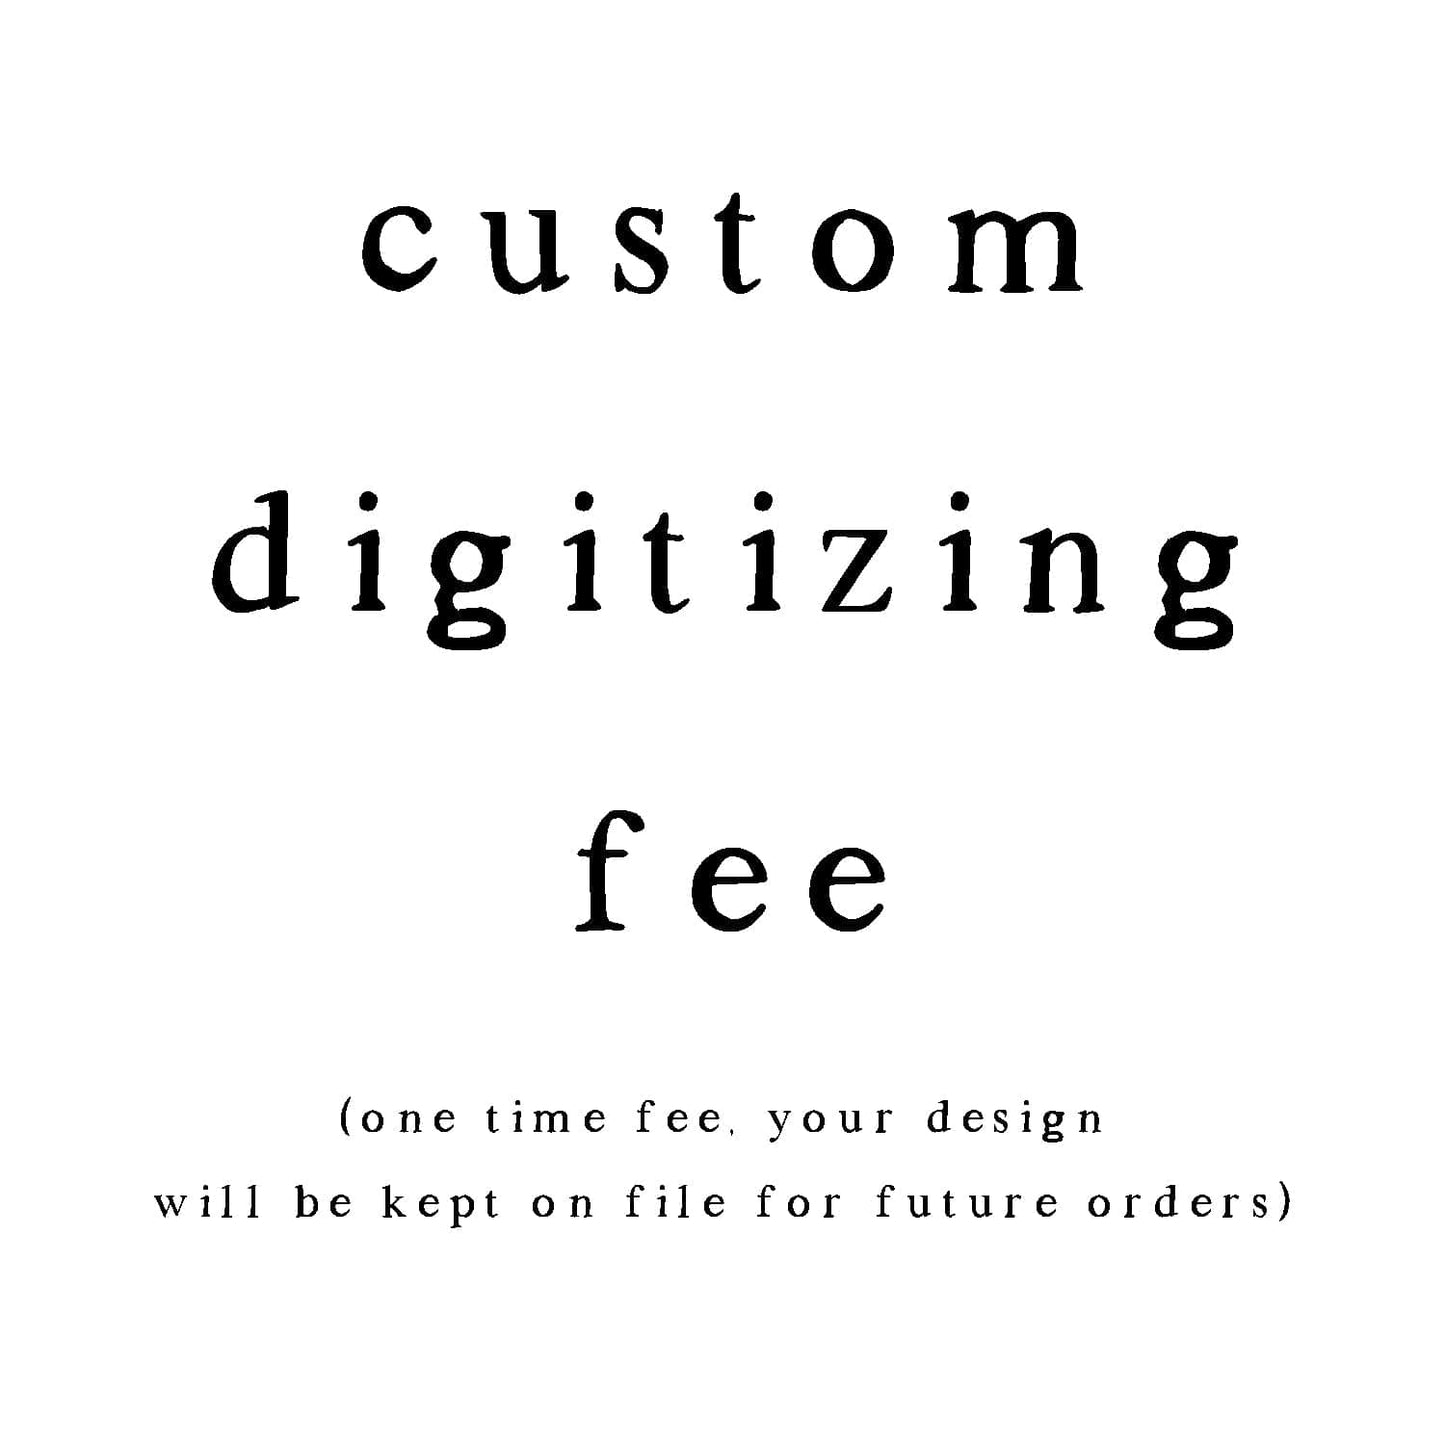 Custom Digitizing Fee for Embroidery